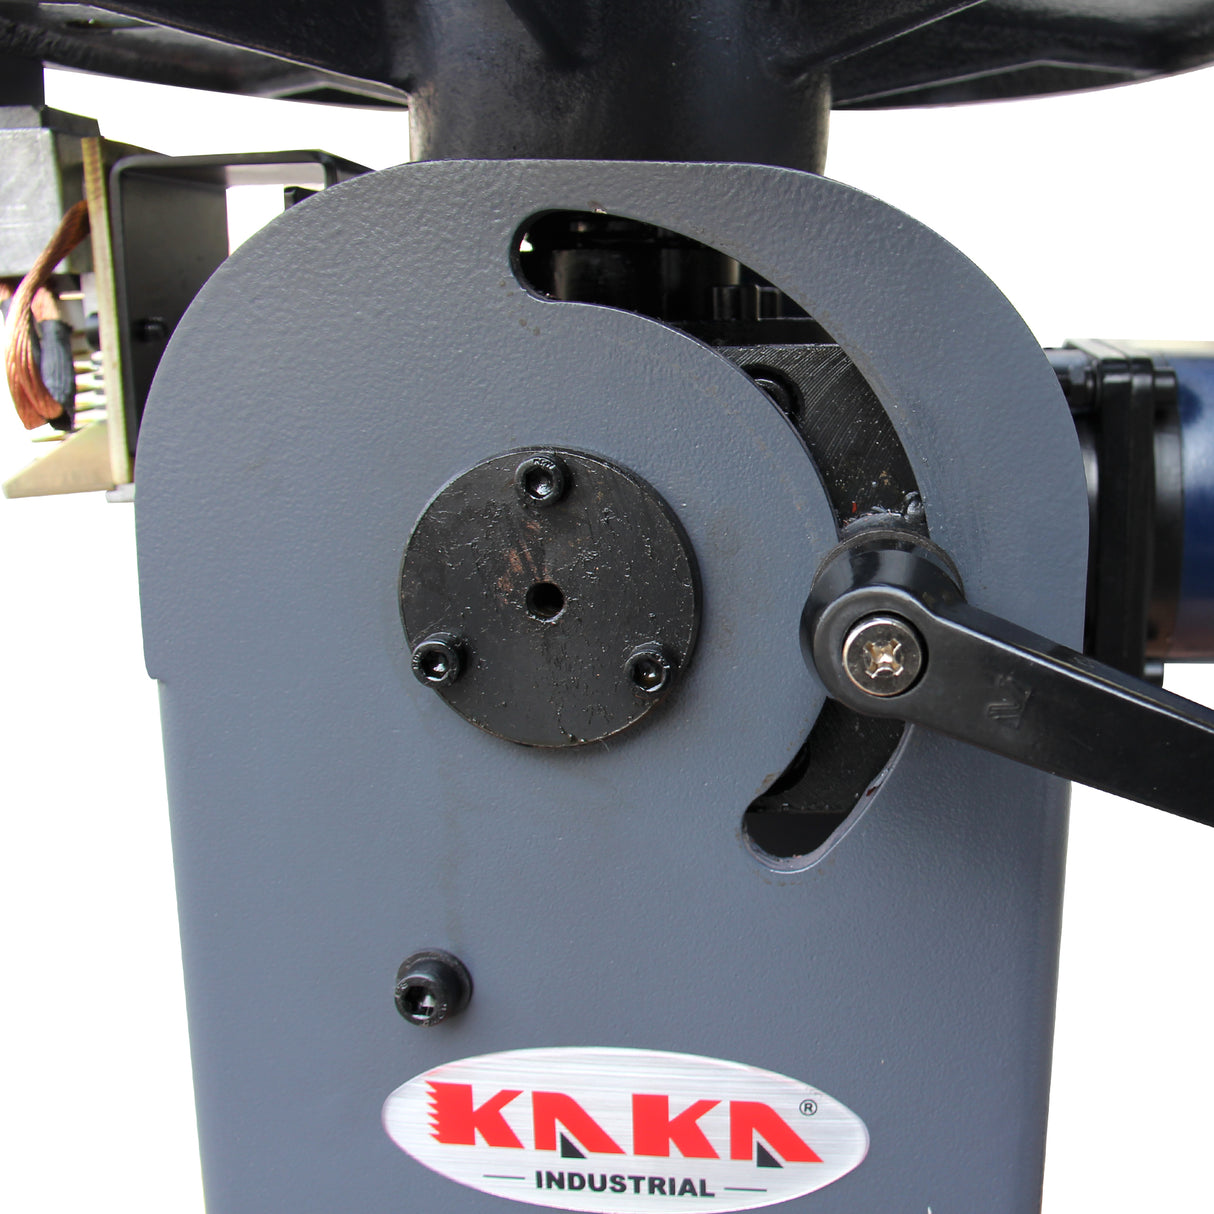 Kaka industrial WP-350 Welding Positioner 771lb Tilt angle 0-135º Rotation motor 125W Rotation speed 0-5 RPM Stepless Speed Control Welder Positioning Machine 110V-60HZ-1PH